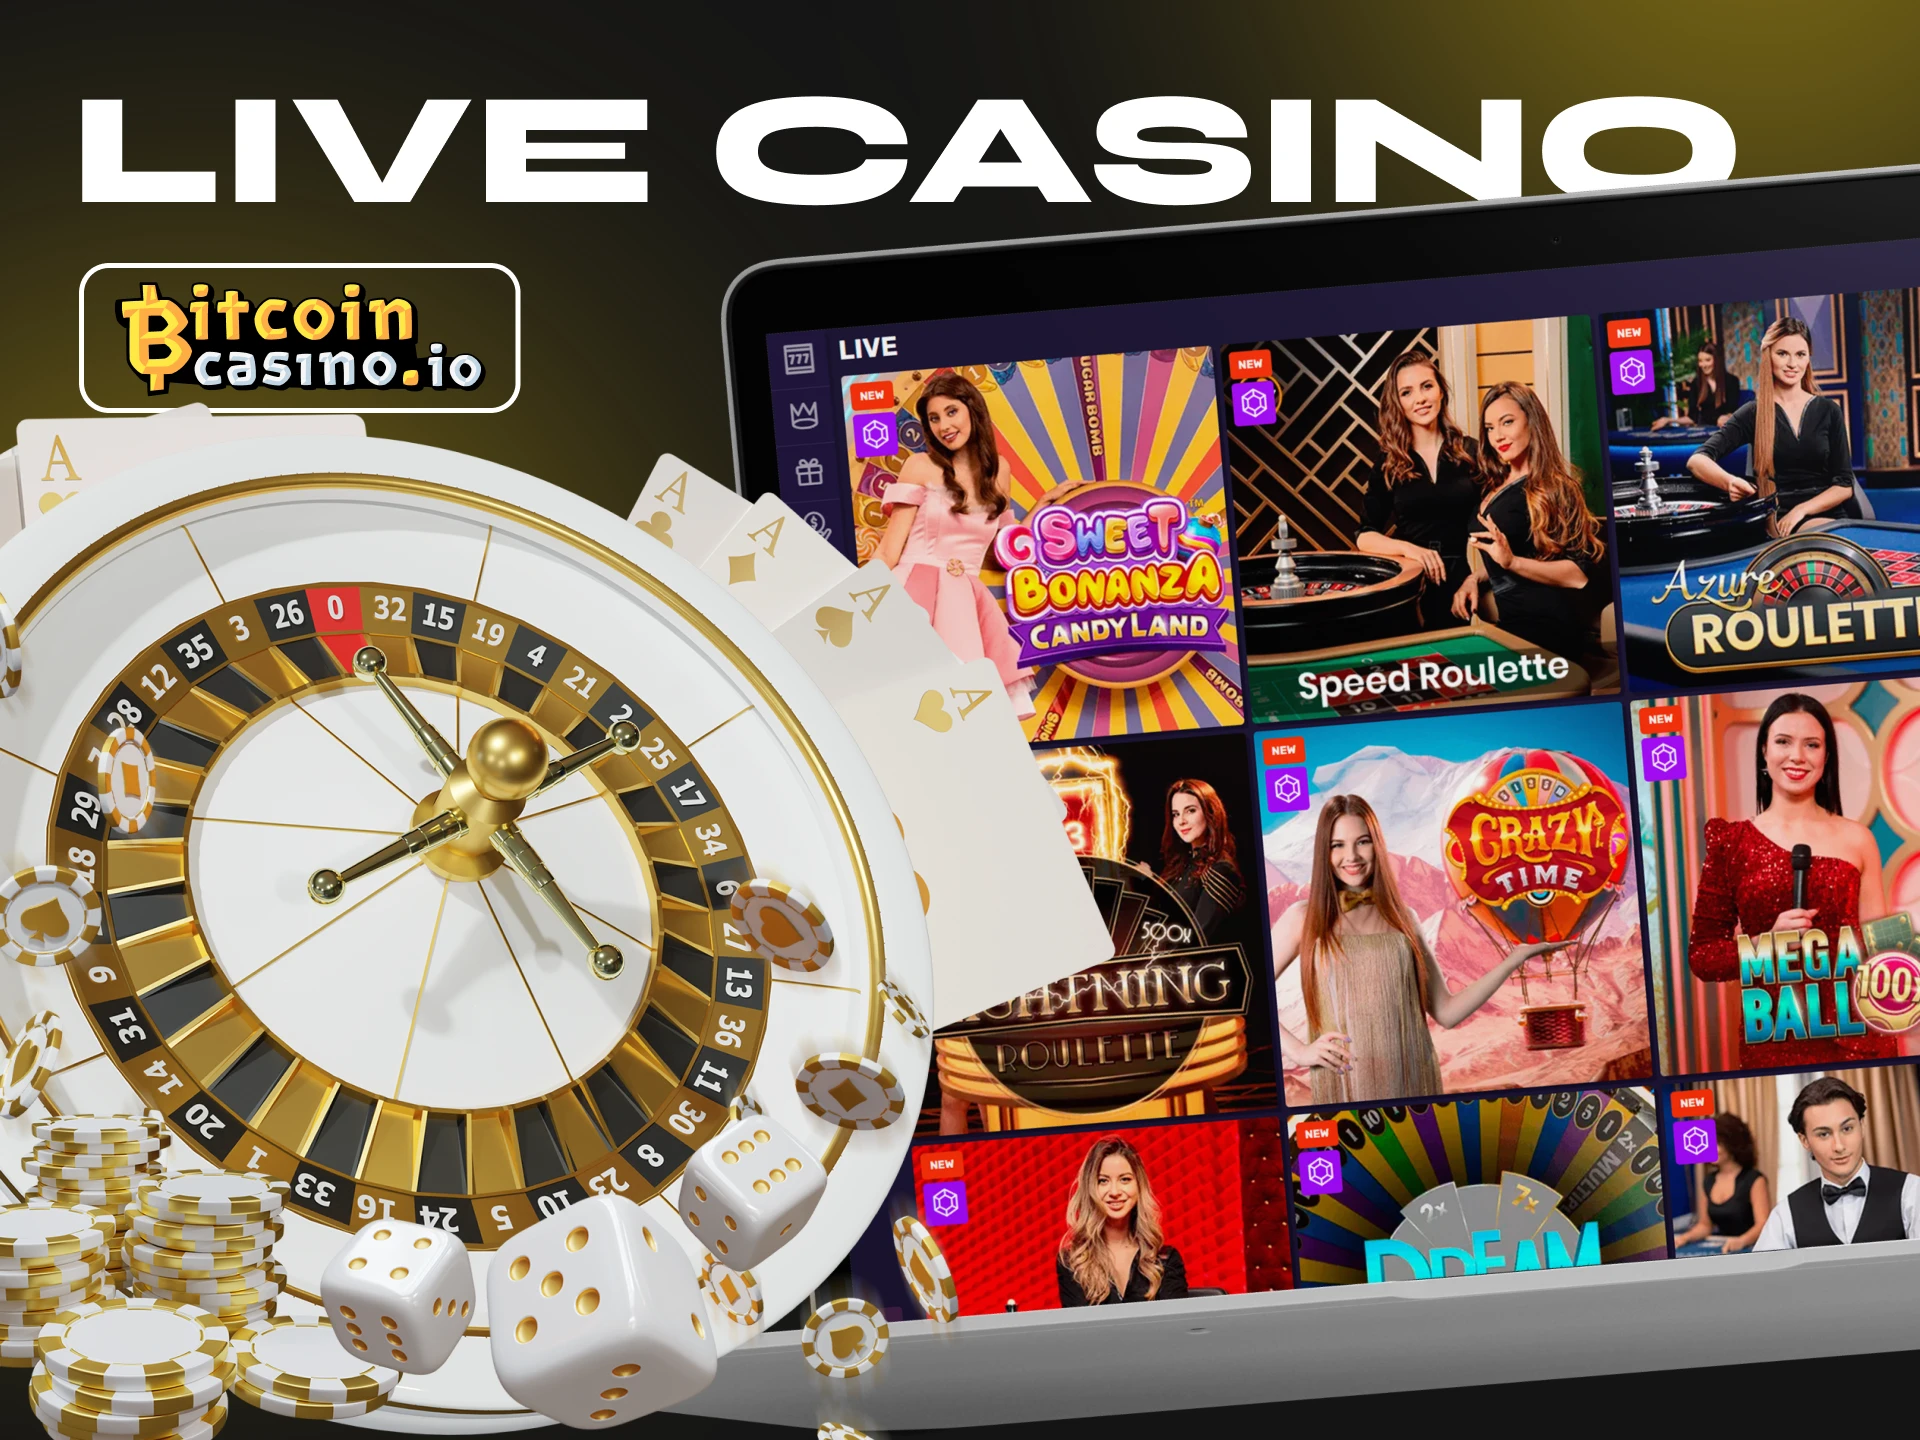 Play live casino now at Bitcoincasino.